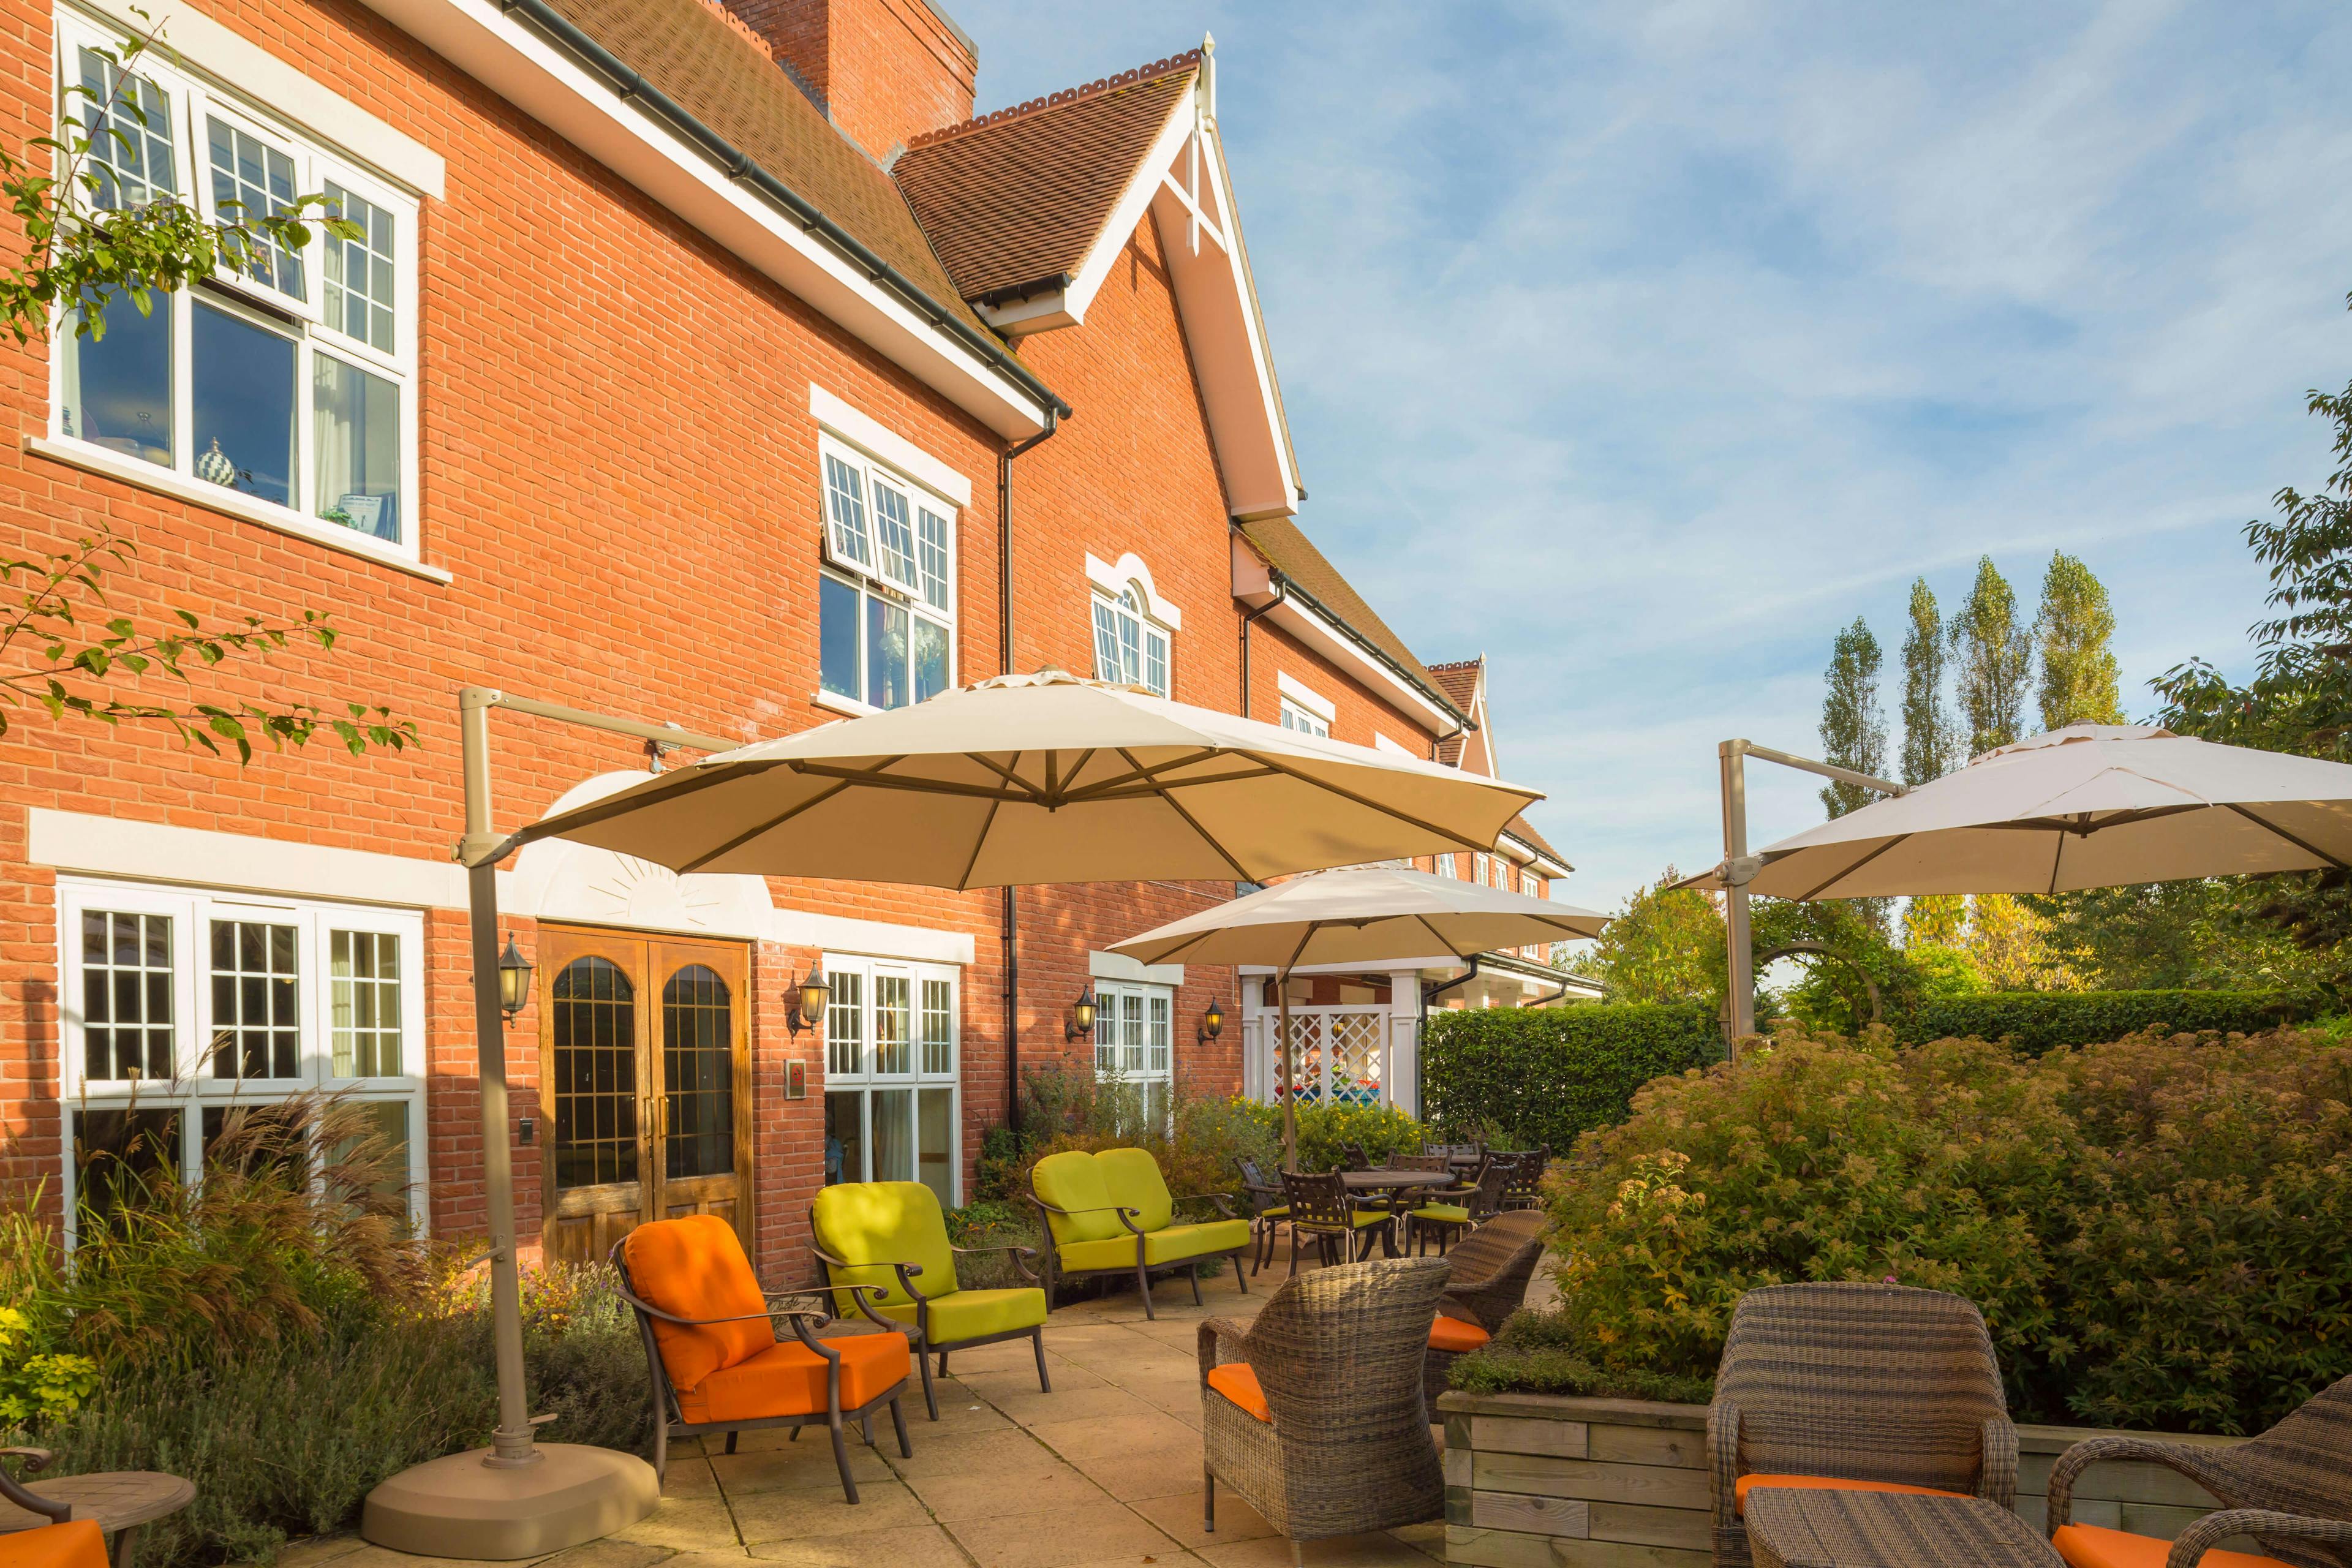 Exterior photo of Foxland Grange Care Home in Wolverhampton